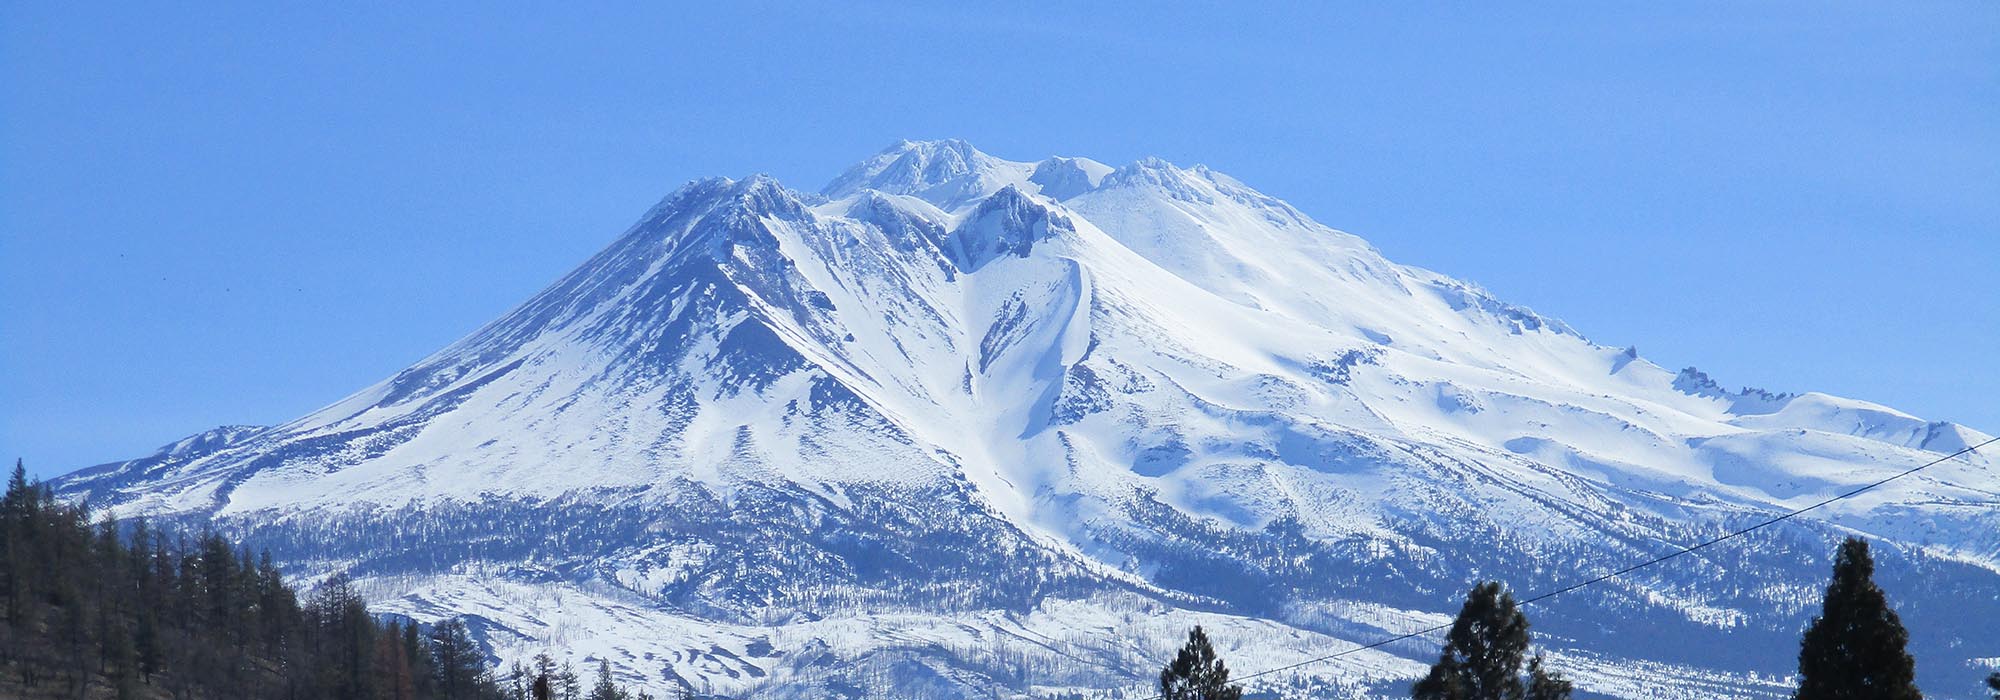 Mount Shasta Mountain